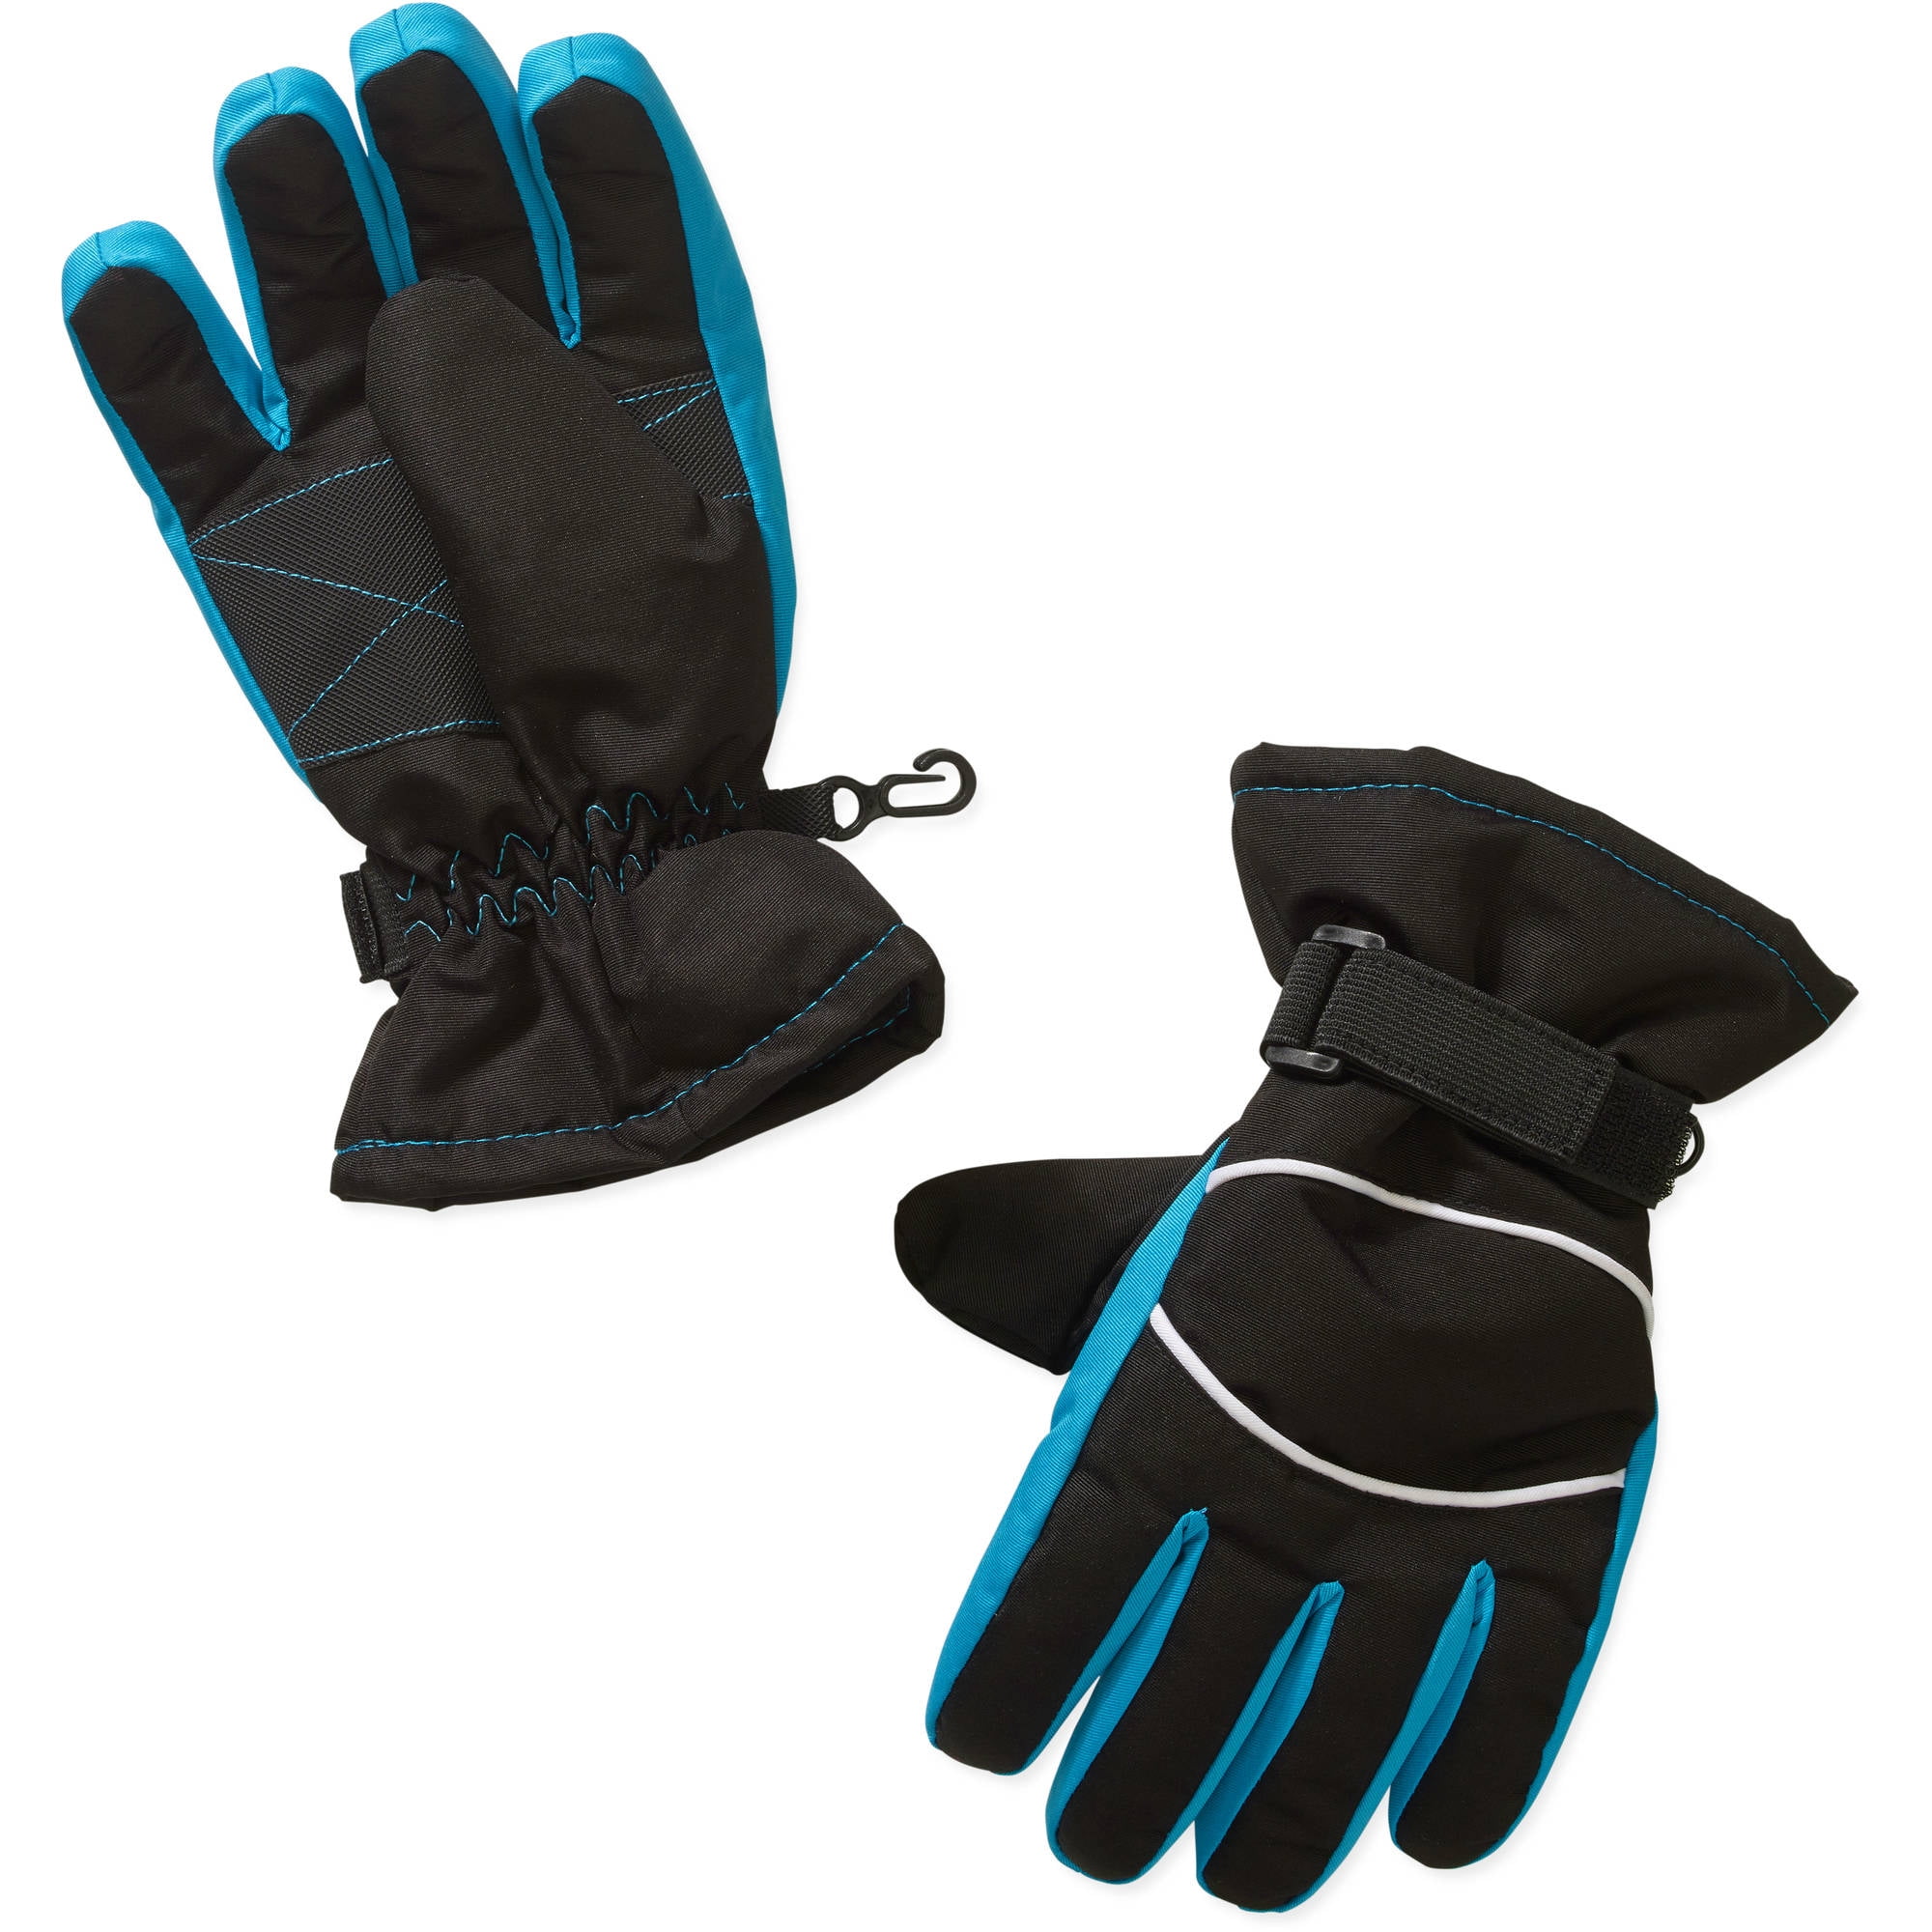 Medium Details about   Ski gloves Winter Snow Gloves Swiss Tech Black Red Bones Small 